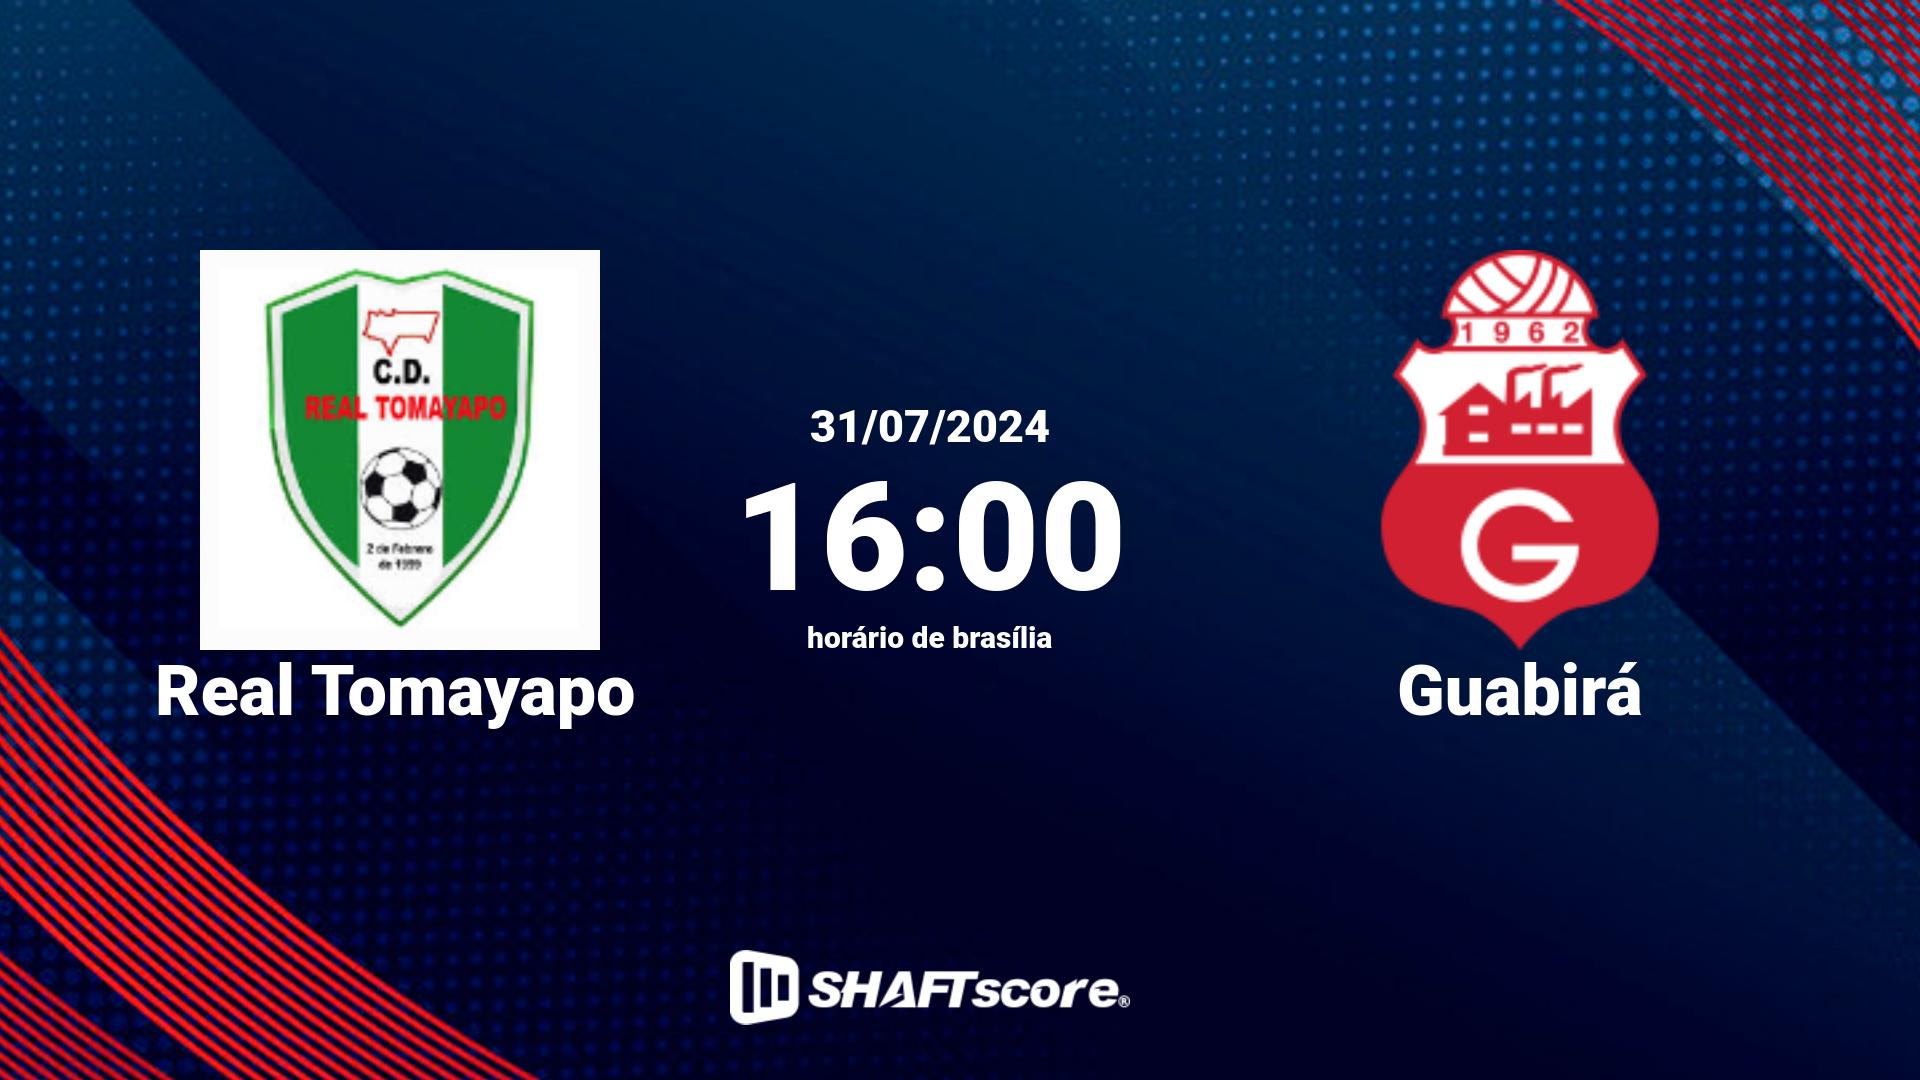 Estatísticas do jogo Real Tomayapo vs Guabirá 31.07 16:00